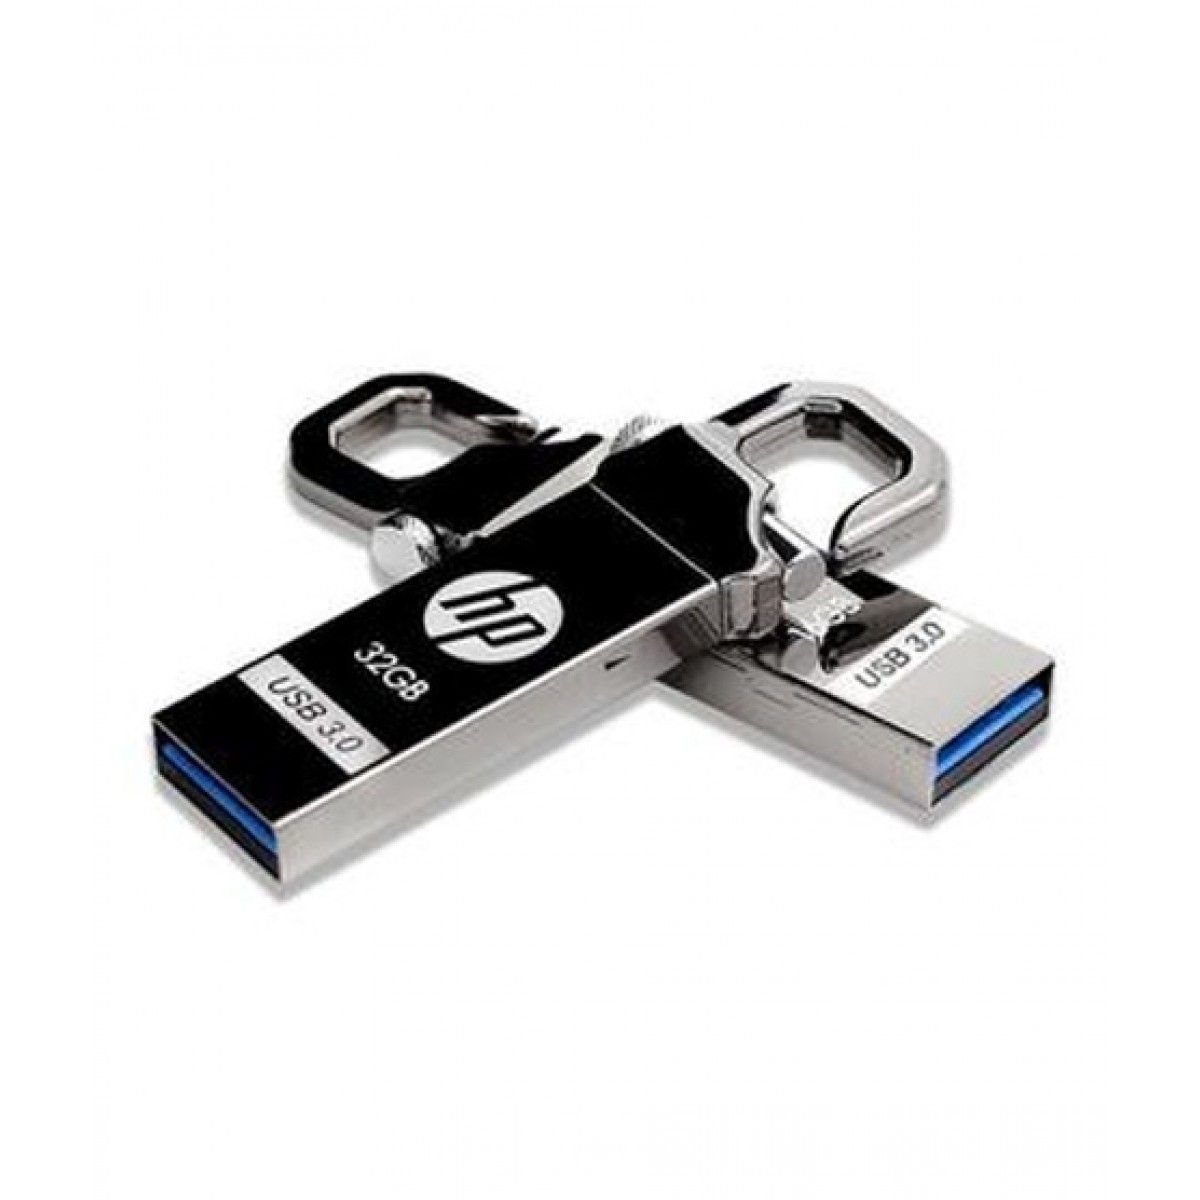 HP 16 GB USB 3.0 Flash Drive Silver V250W